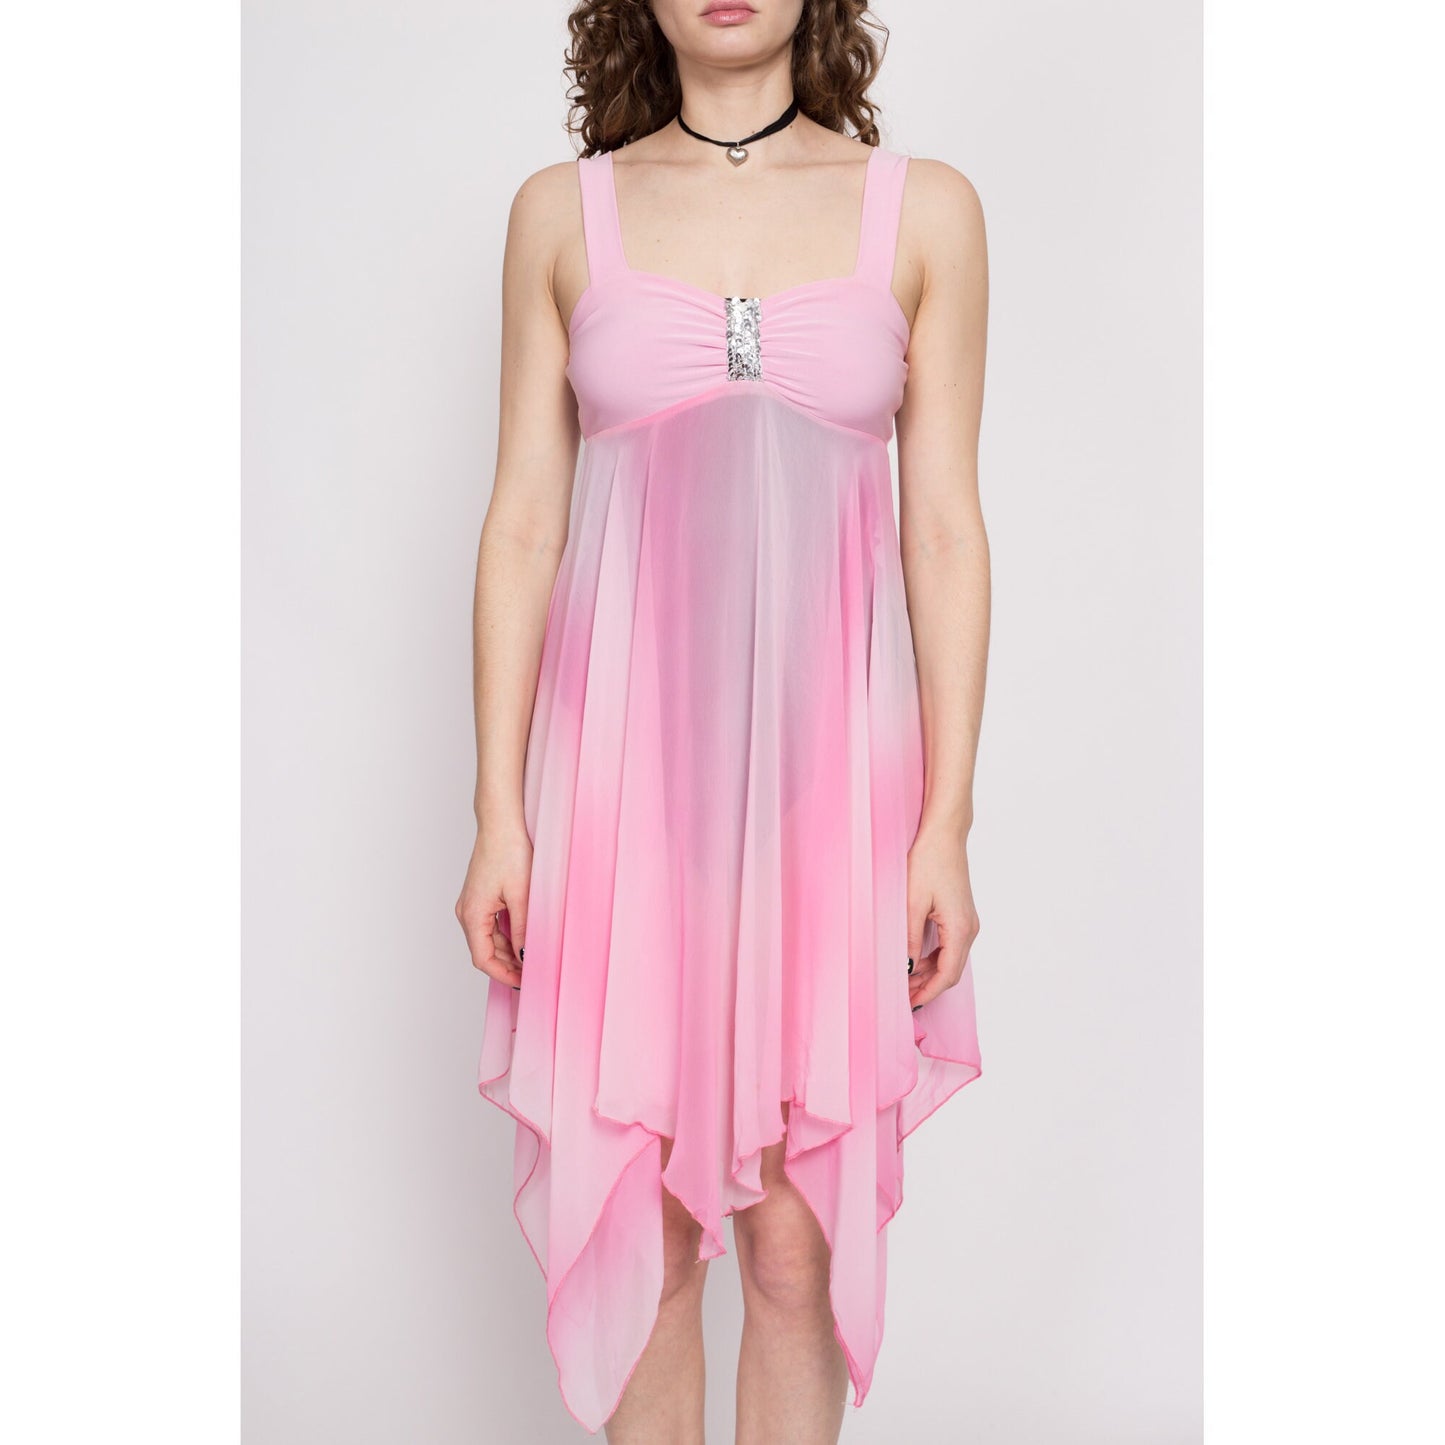 Y2K Sheer Pink Scarf Hem Dress - Small to Medium | Tie Dye Sequin Trim 2000s Midi Hanky Party Dress